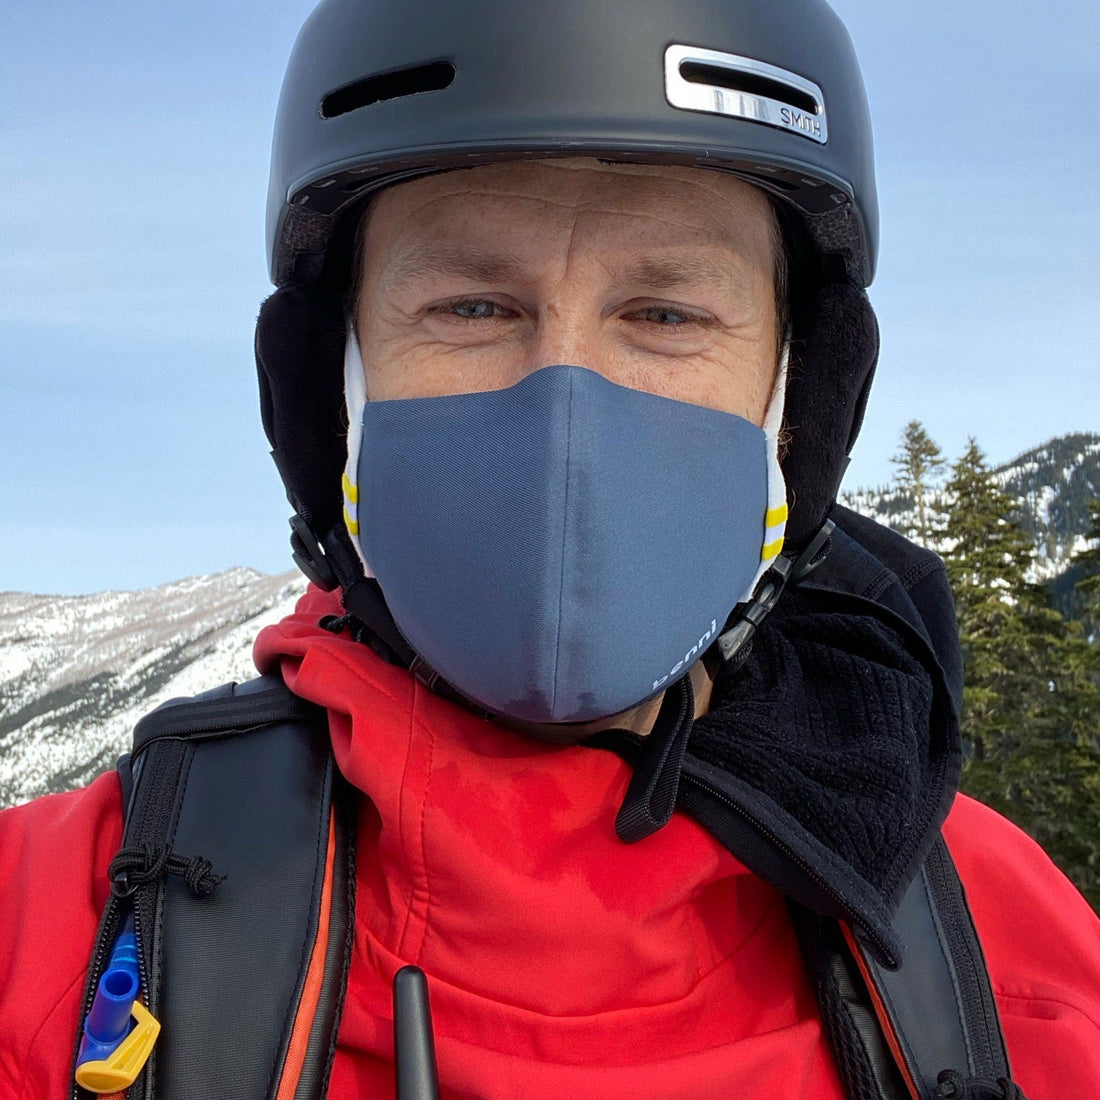 Benni Ski Mask